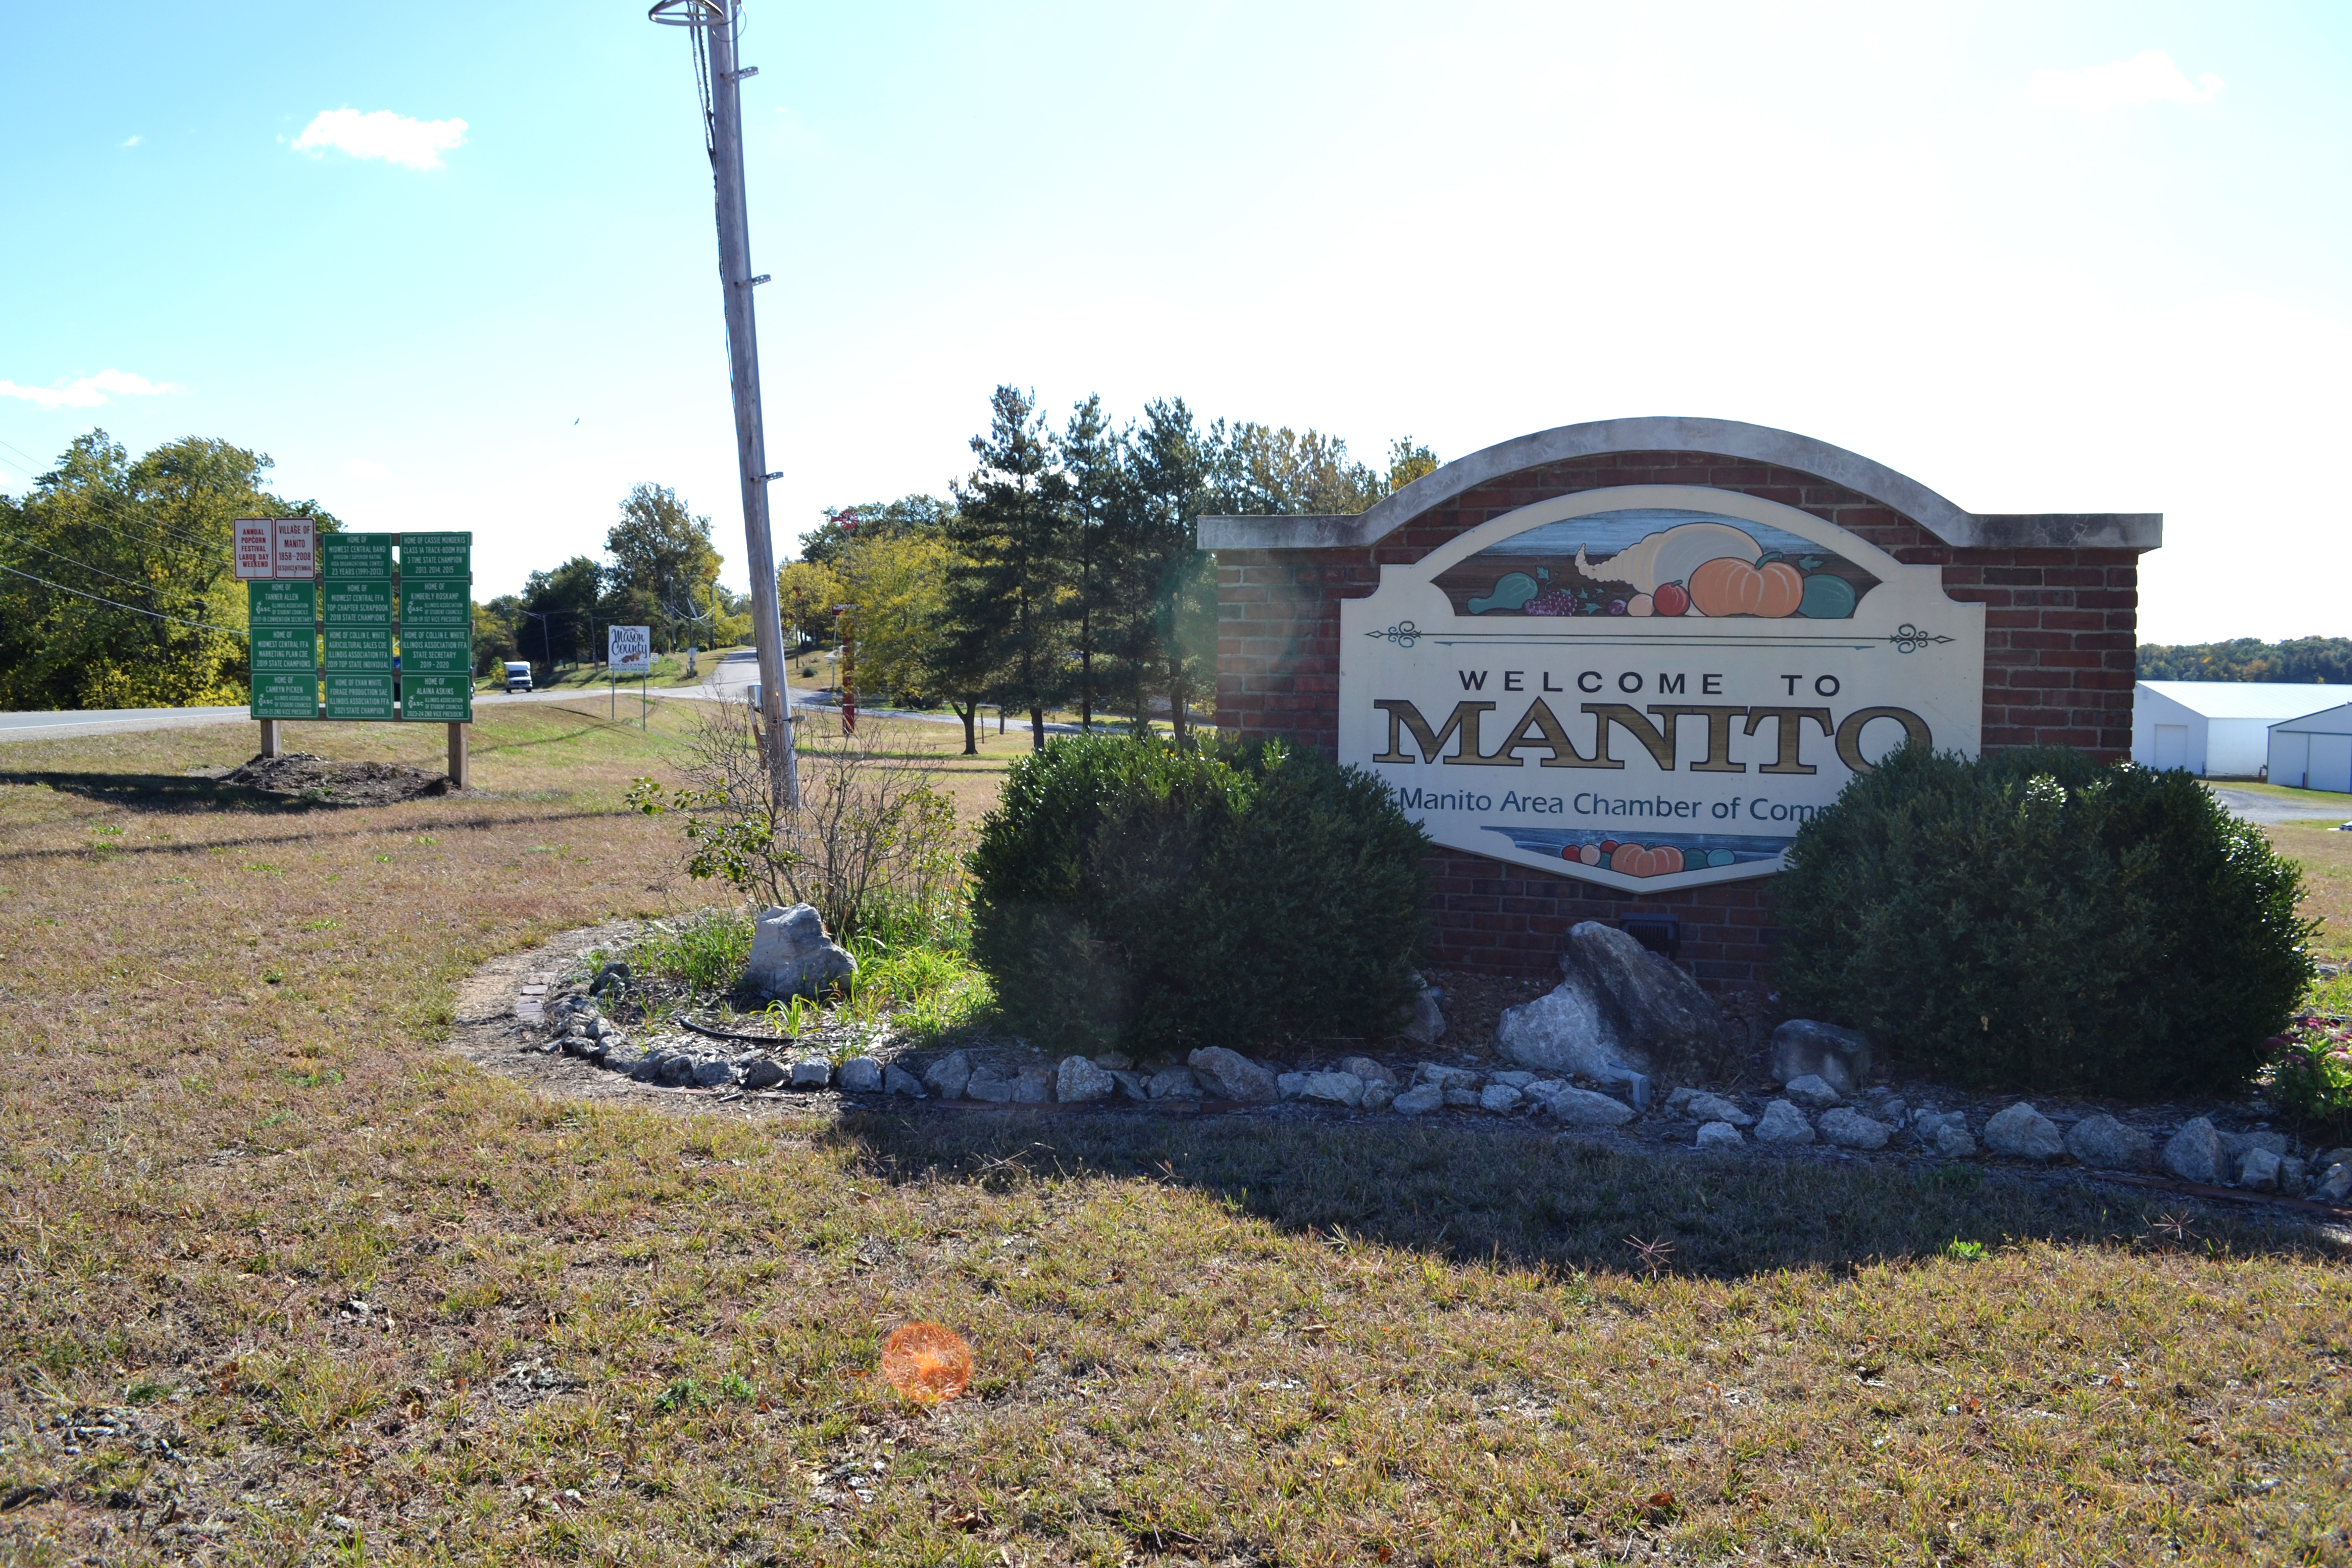 Manito, Illinois